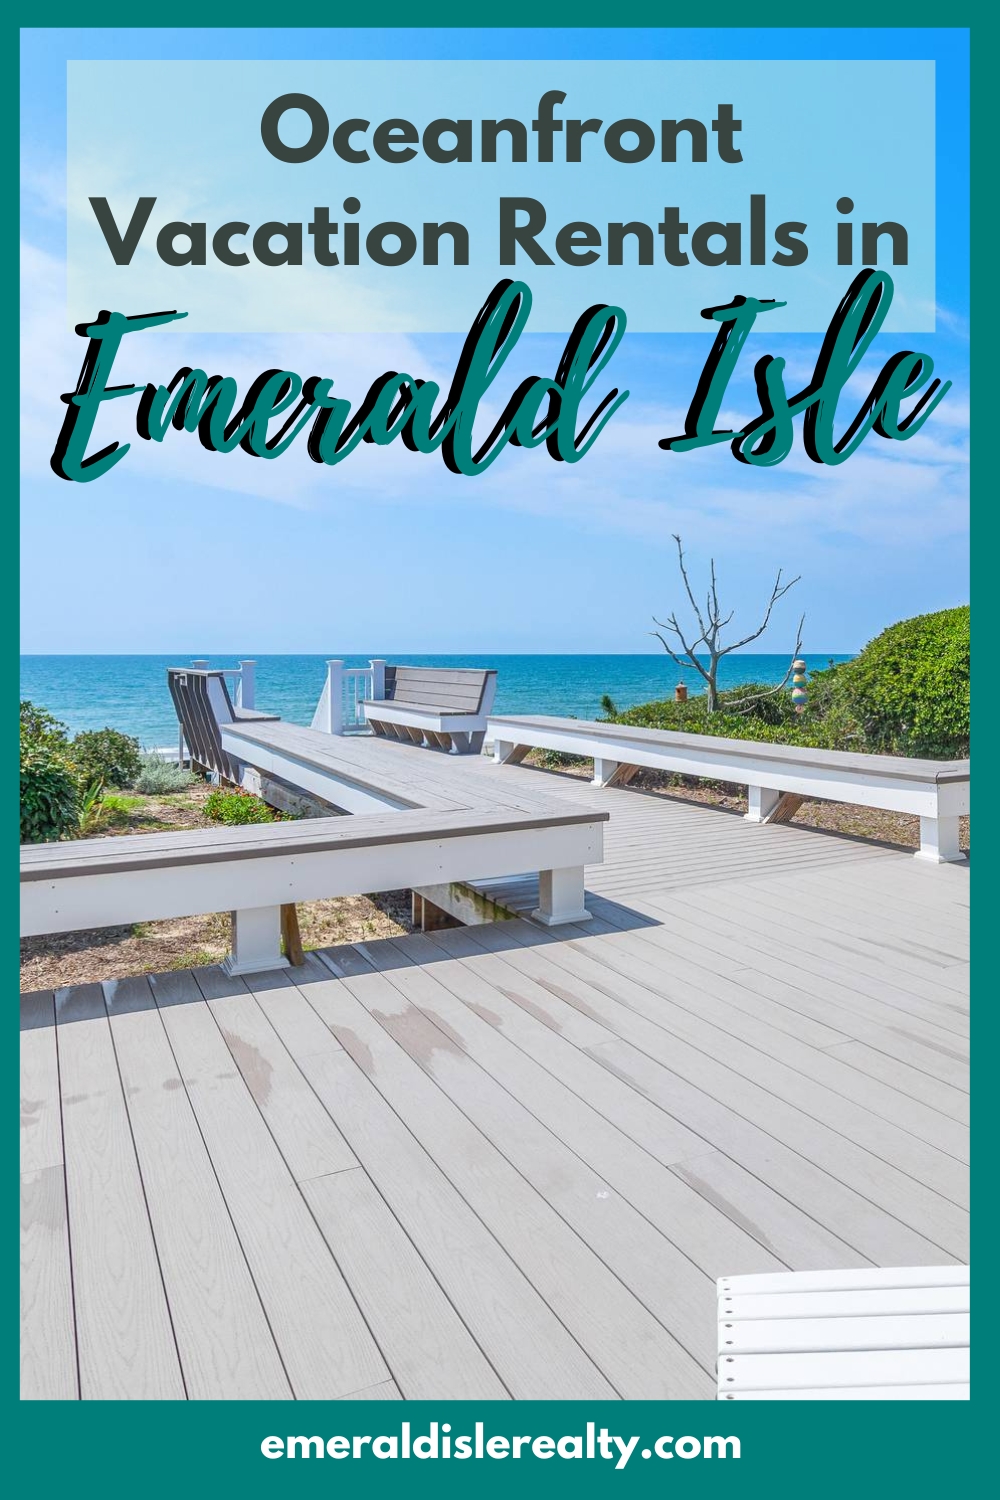 Oceanfront Vacation Rentals in Emerald Isle, NC